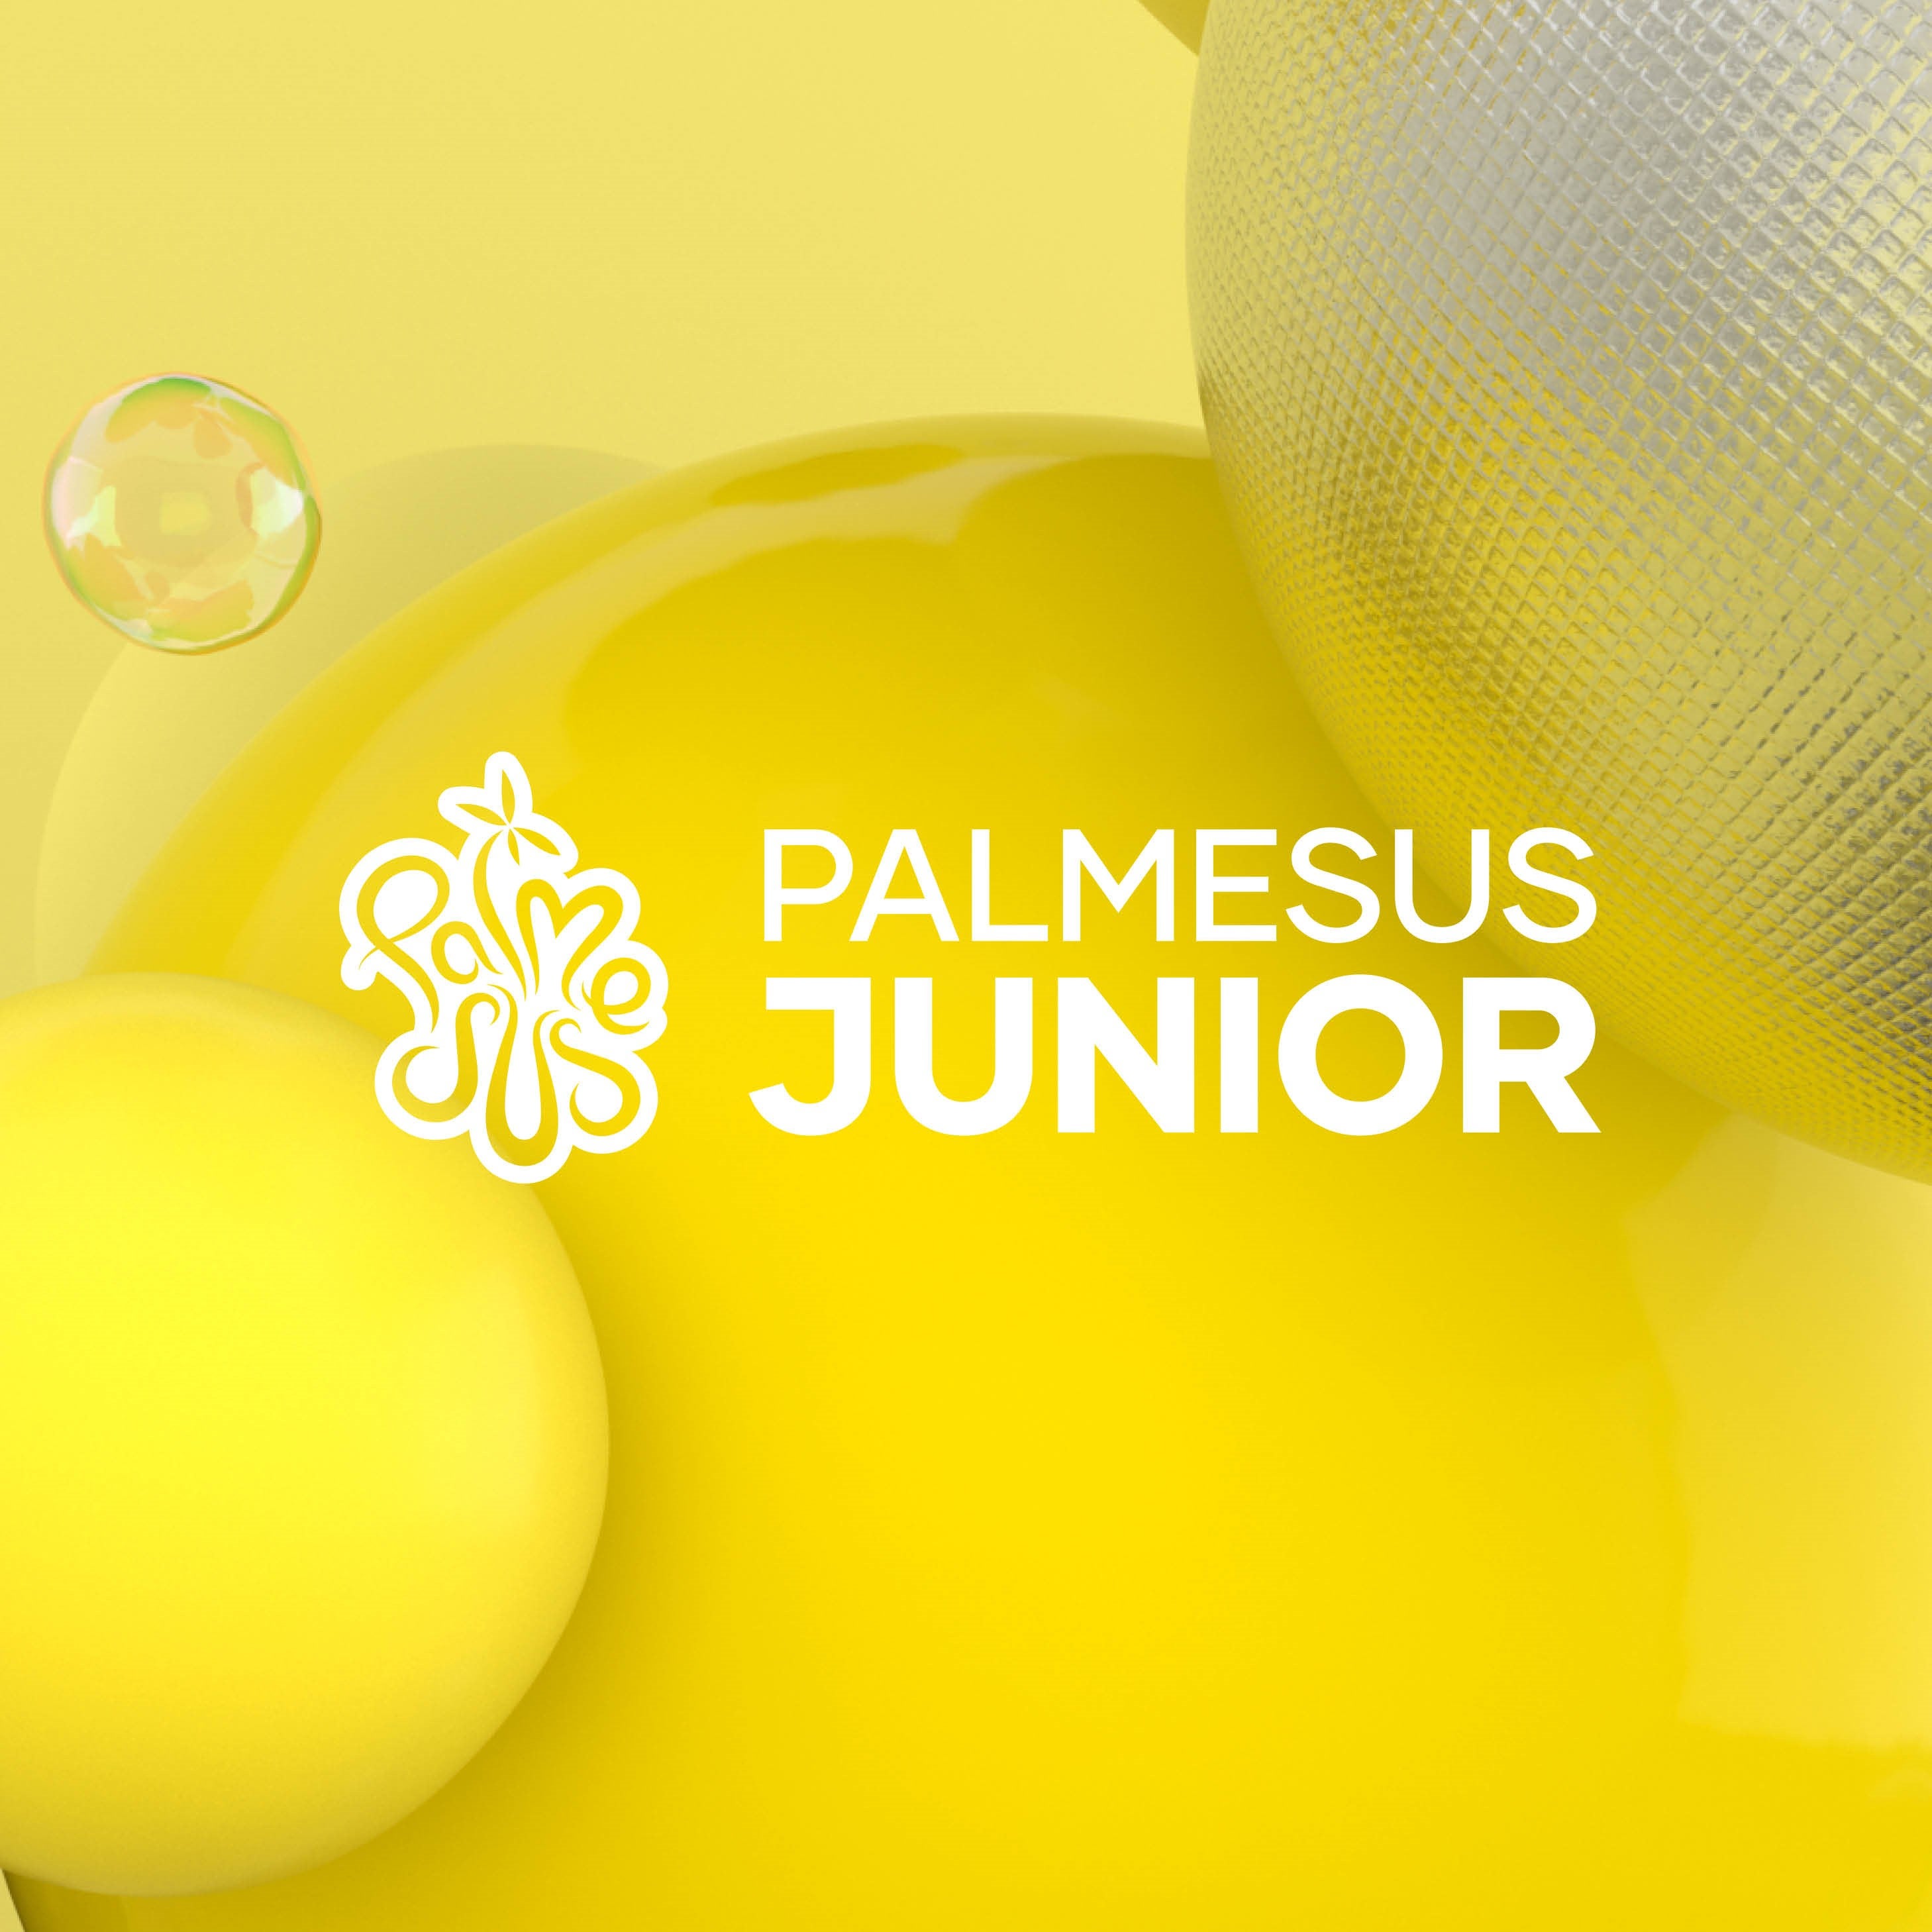 Palmesus Junior presale information on freepresalepasswords.com